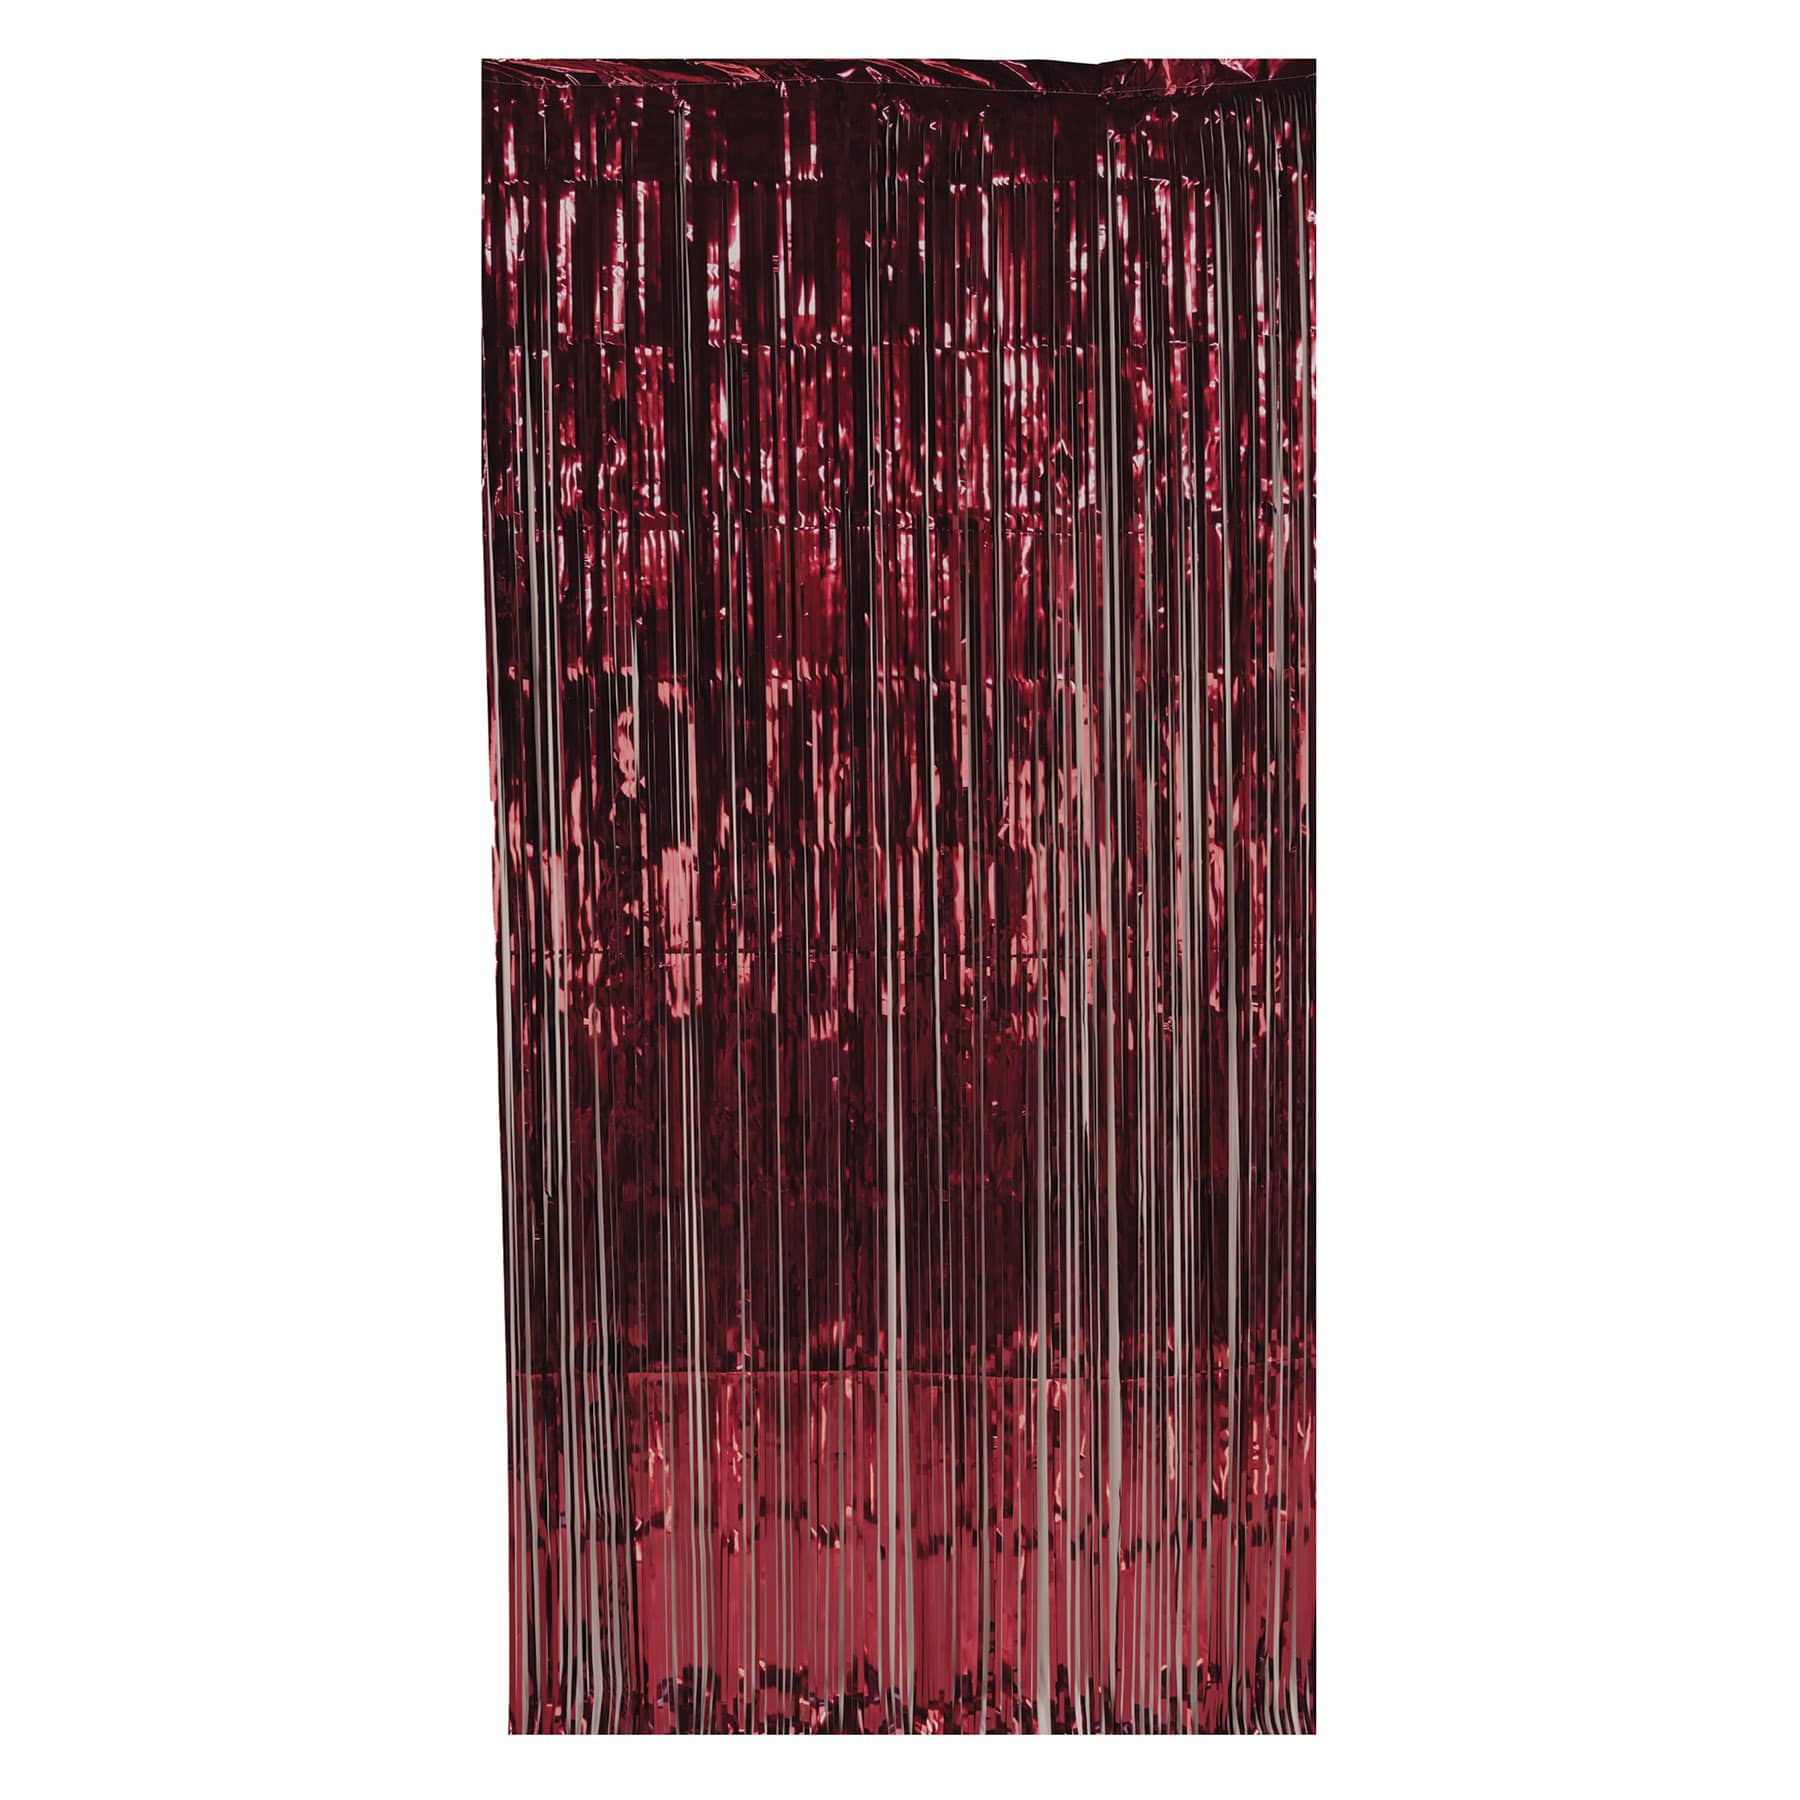 Burgundy Doorway Curtain made of metallic strands